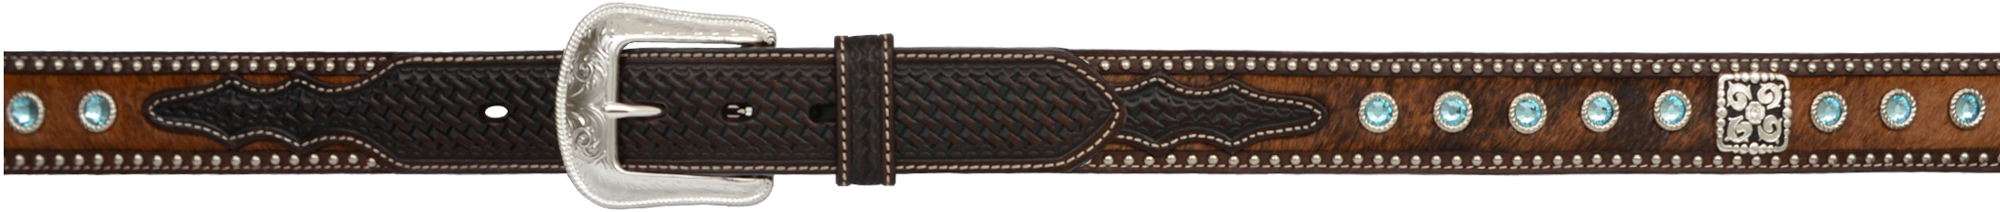 3D Dark Brown Full Grain Leather Mens Belt Hair-On Square Conchos 42 - image 1 of 4